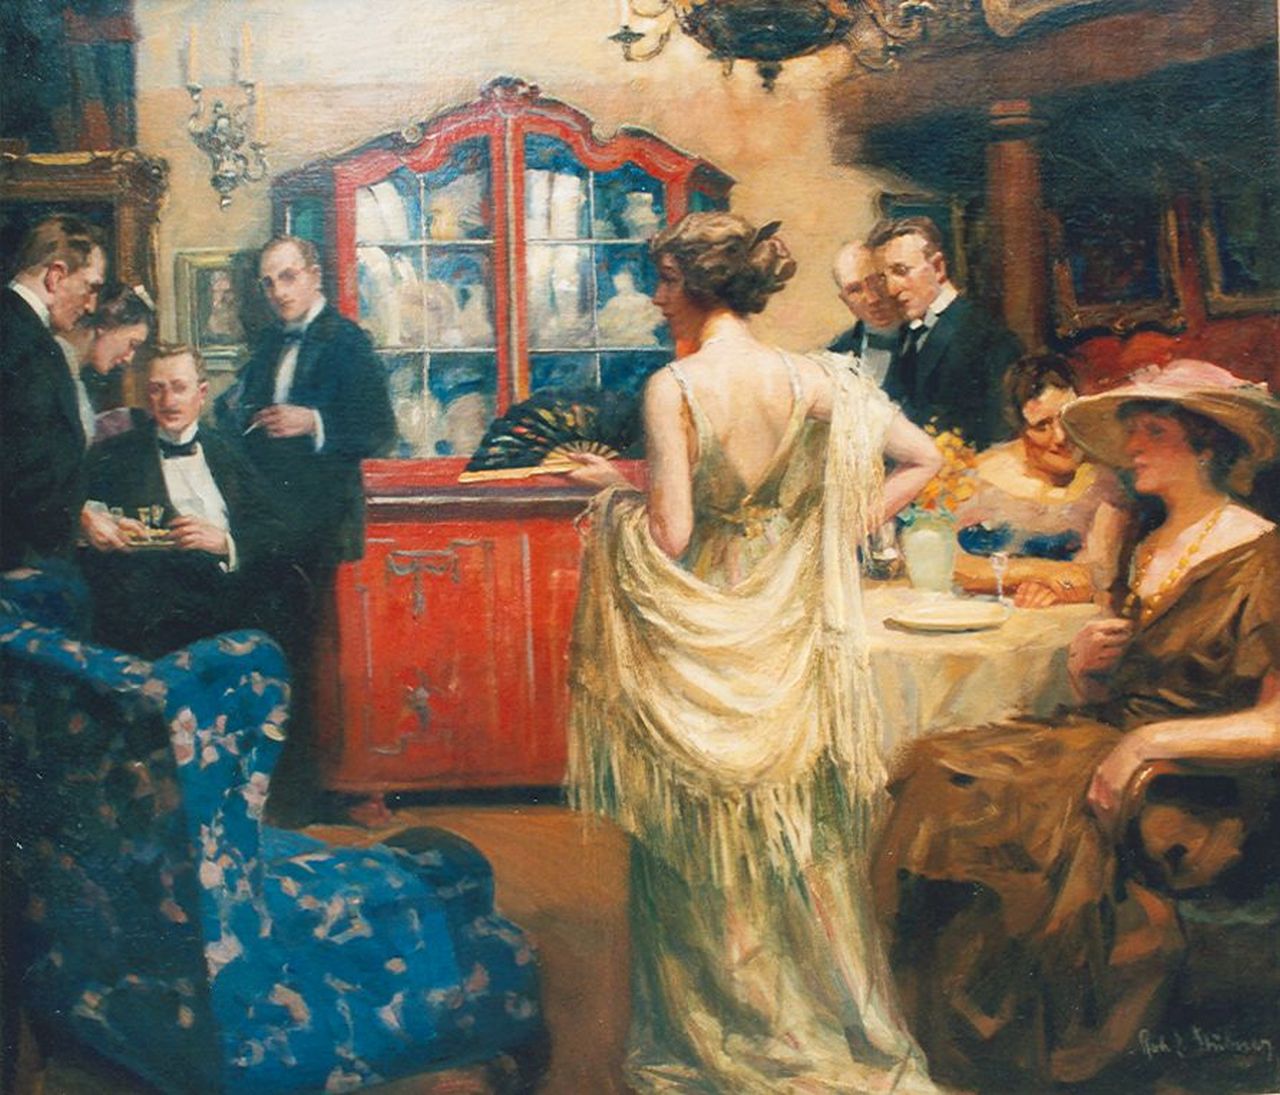 Stübner R.E.  | Robert Emil Stübner, Cocktail Party, Öl auf Leinwand 120,0 x 140,0 cm, signed l.r.